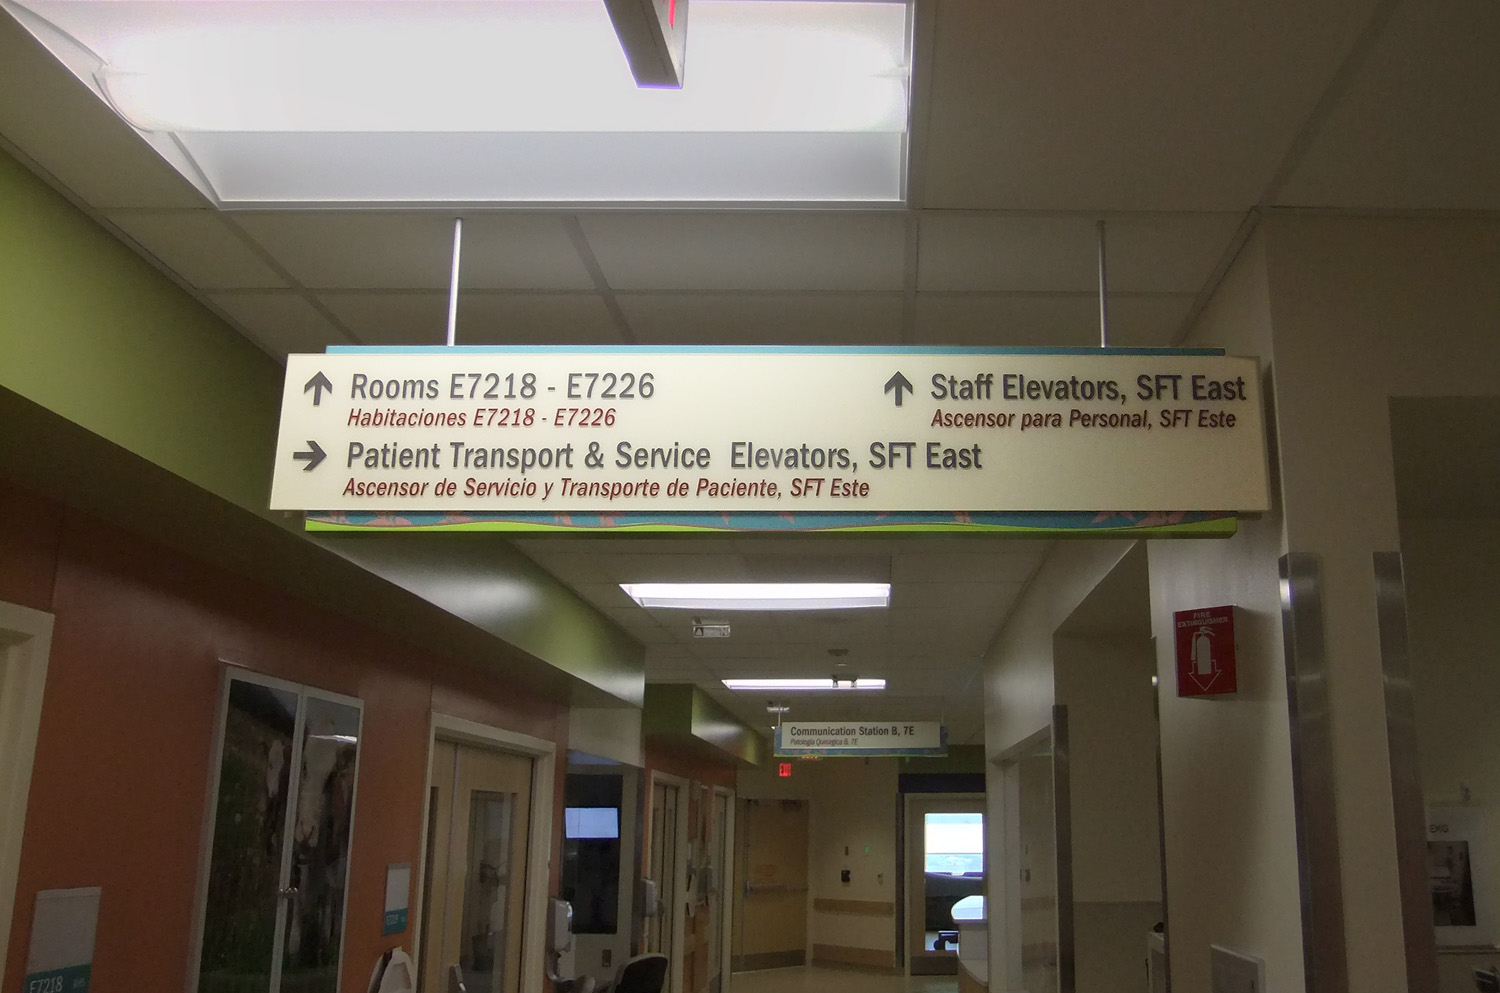 Hospital_ceiling_mounted_sign.jpg